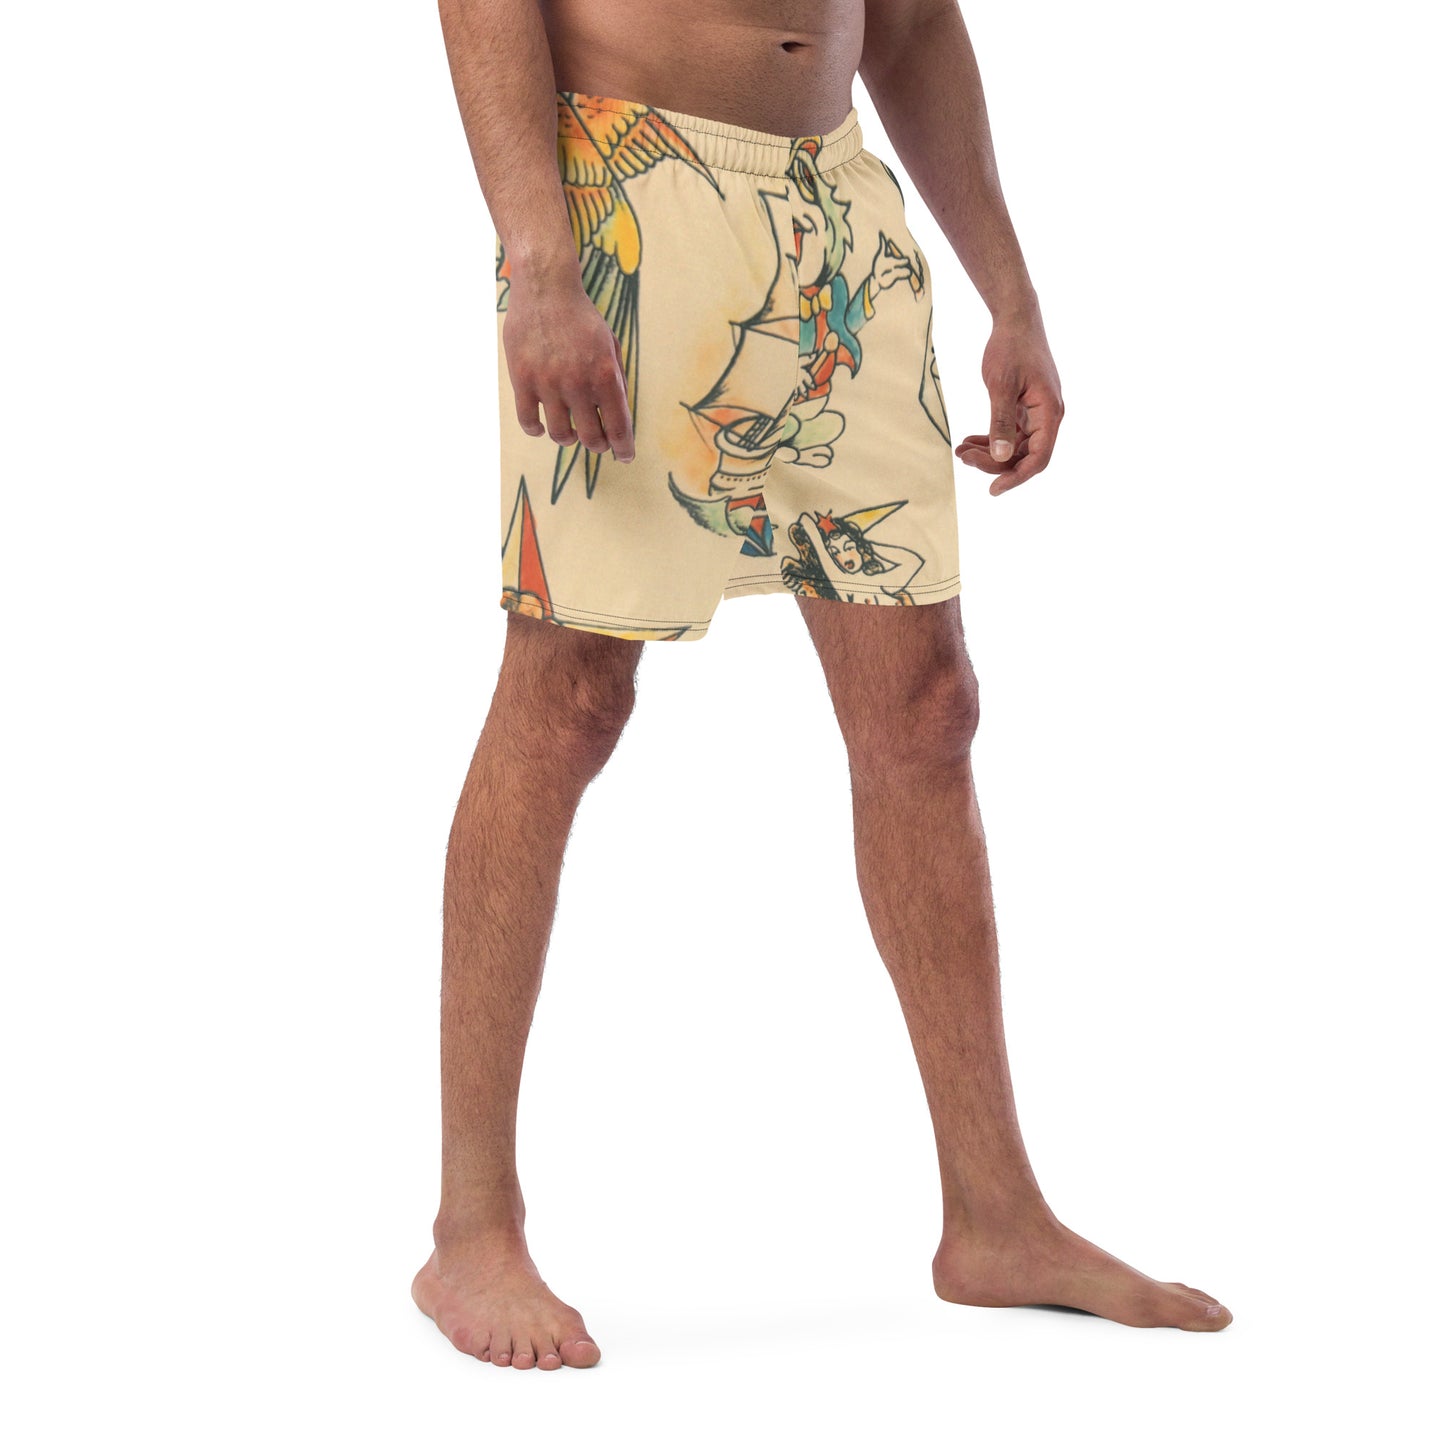 Tattoo Ole - Men's swim trunks